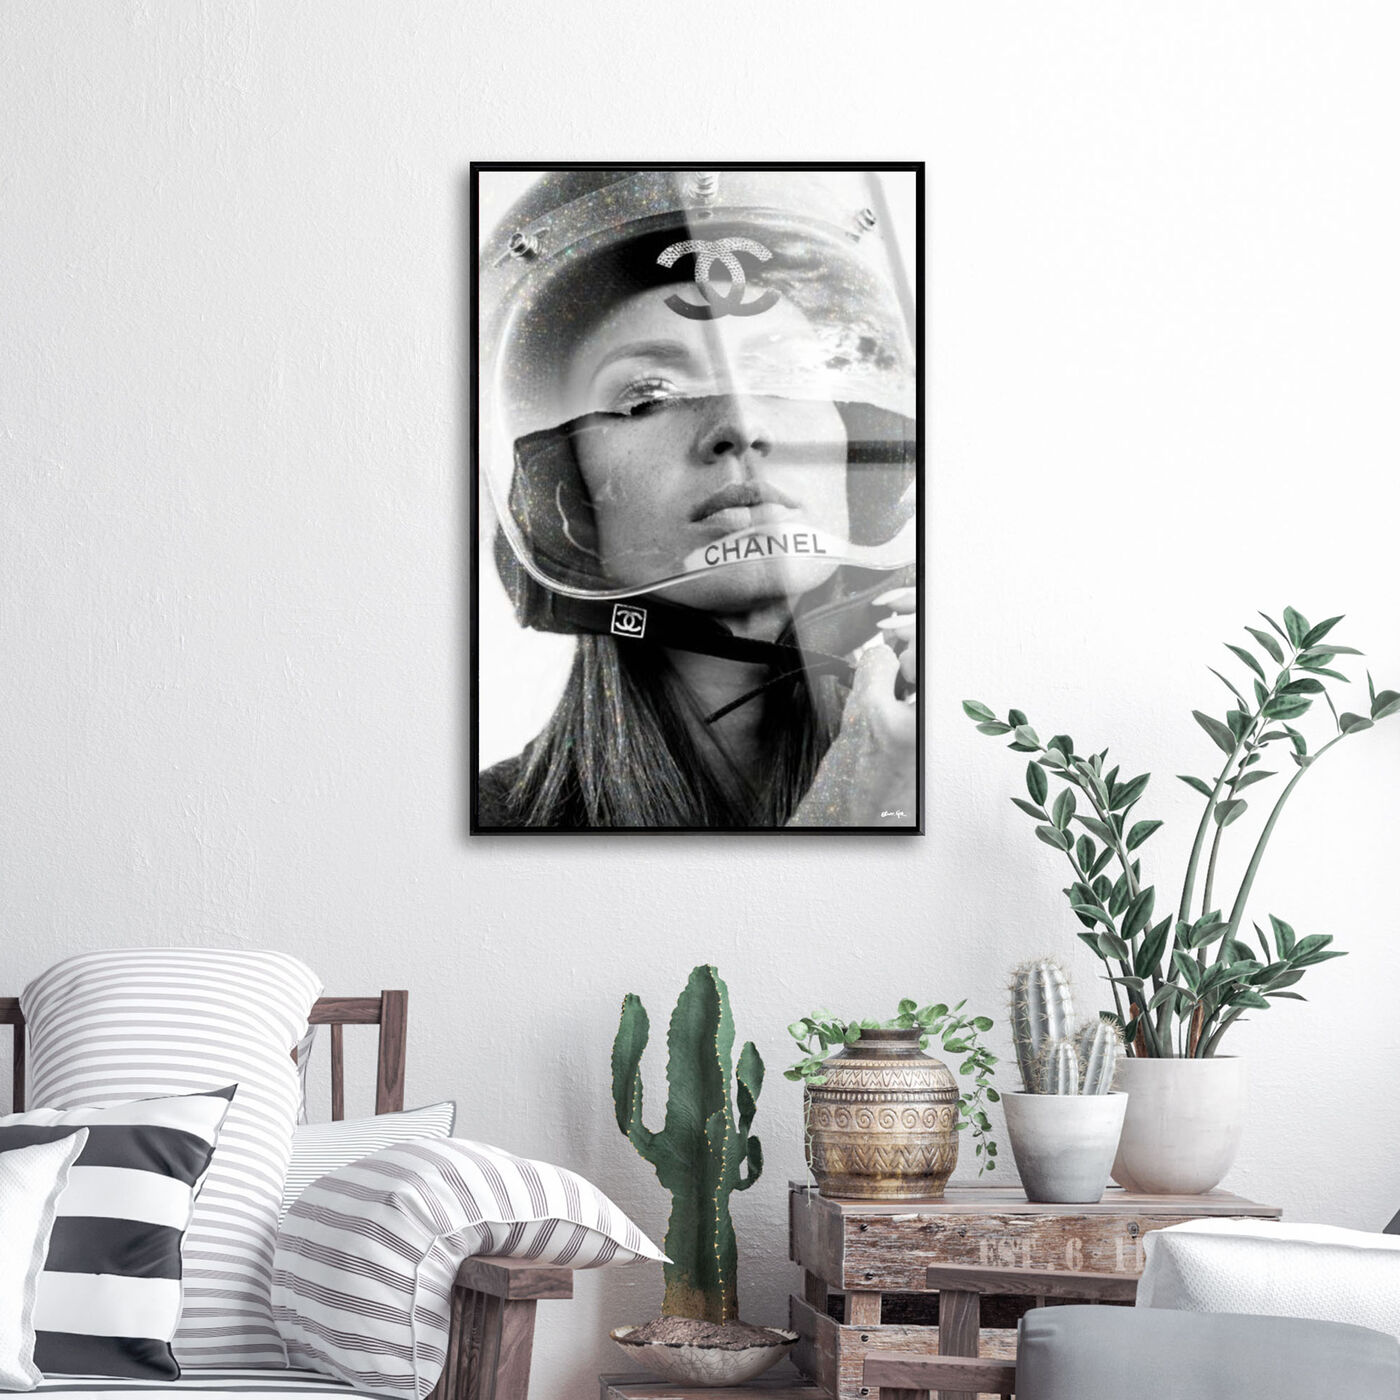 Motogirl - Framed Acrylic Art